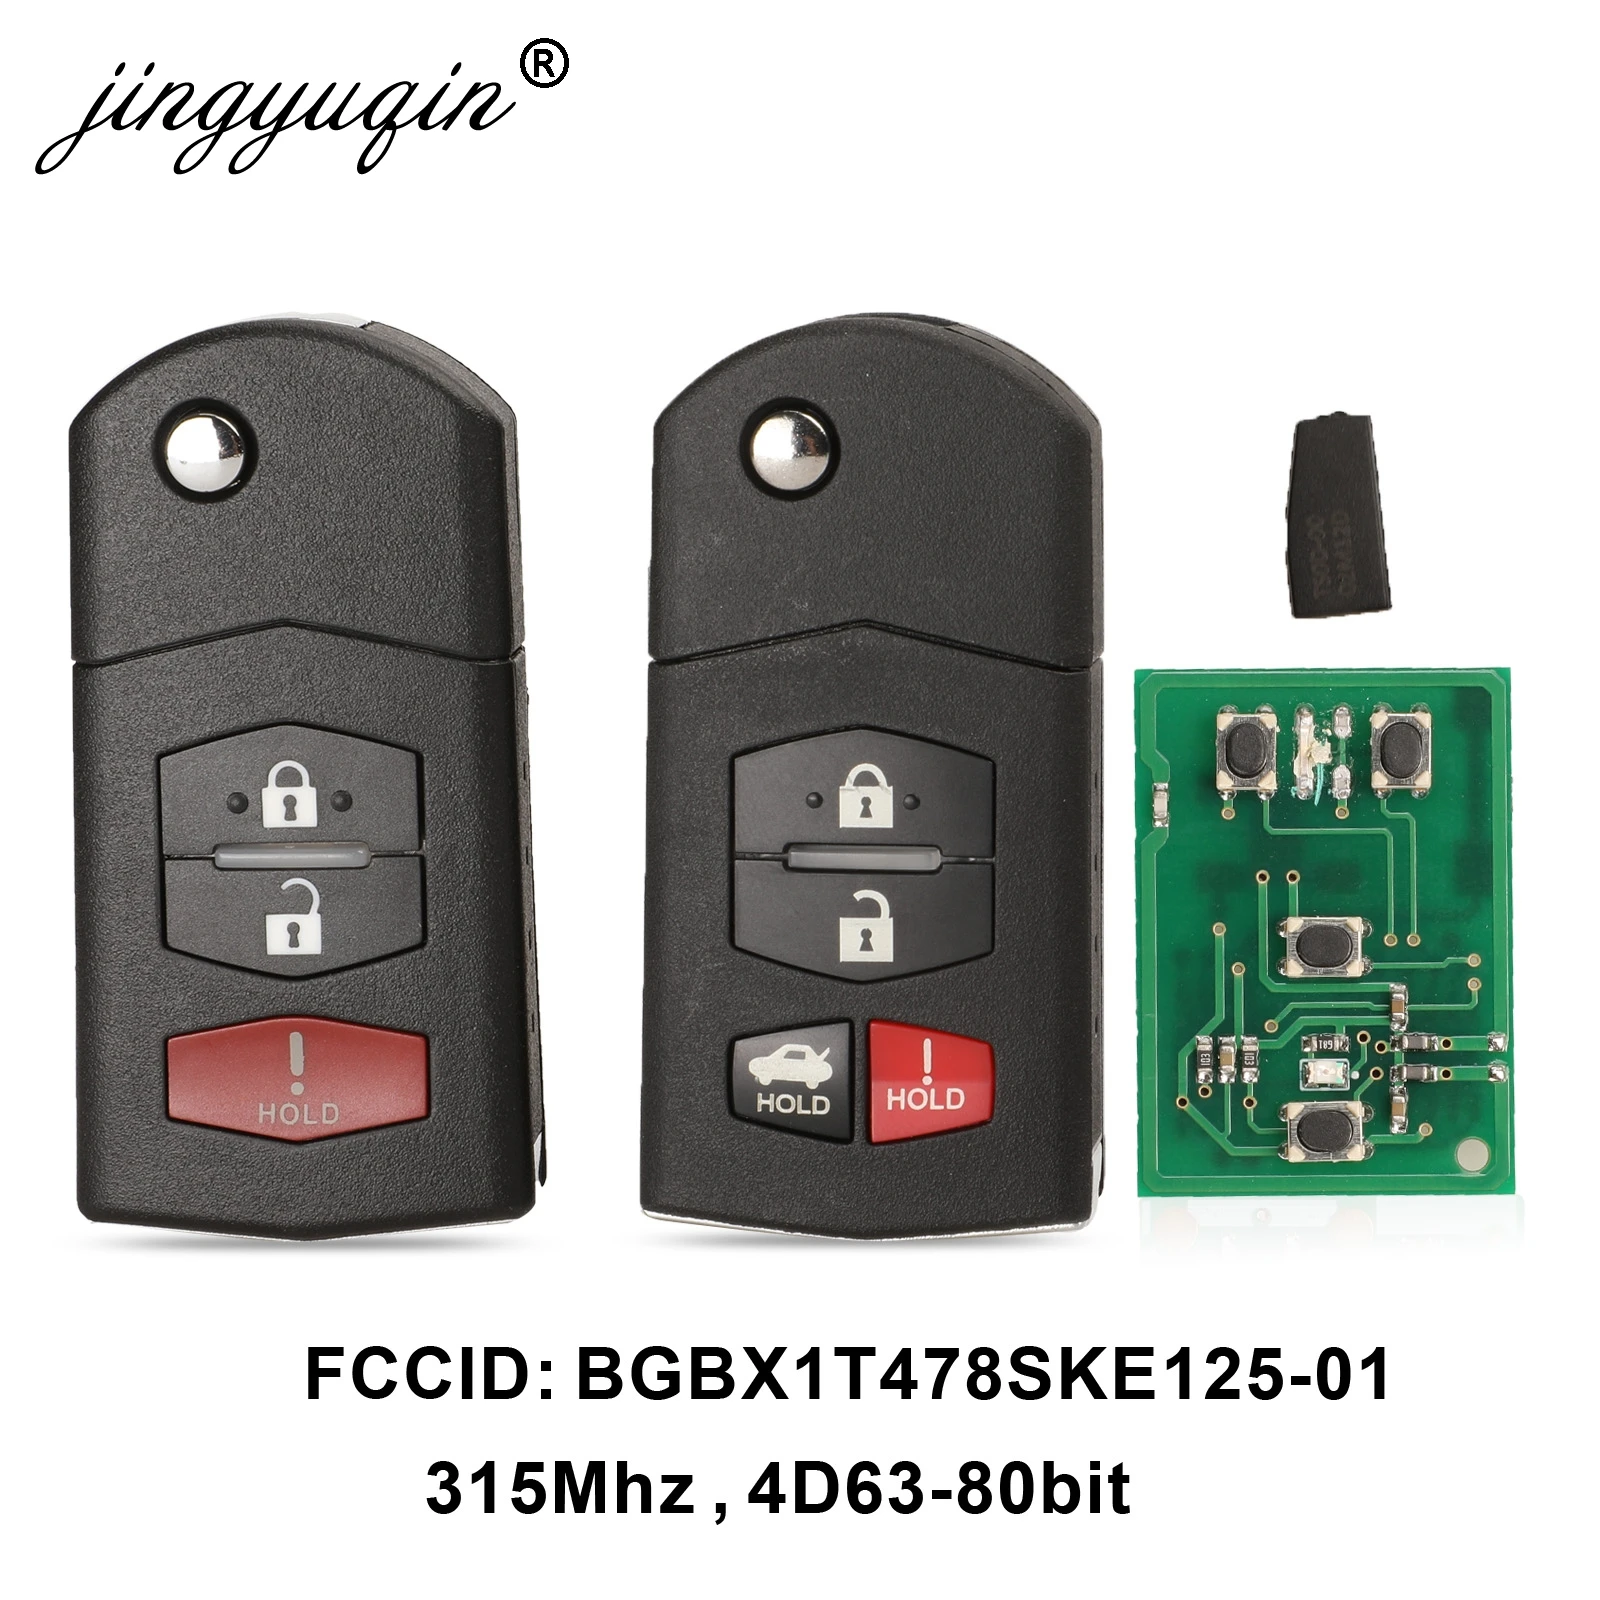 jingyuqin 3/4 Buttons Remote Folding Car Key 315Mhz For Mazda 3 5 6 CX-7 CX-9 MX-5 Miata BGBX1T478SKE125-01 4D63 Chip Fob